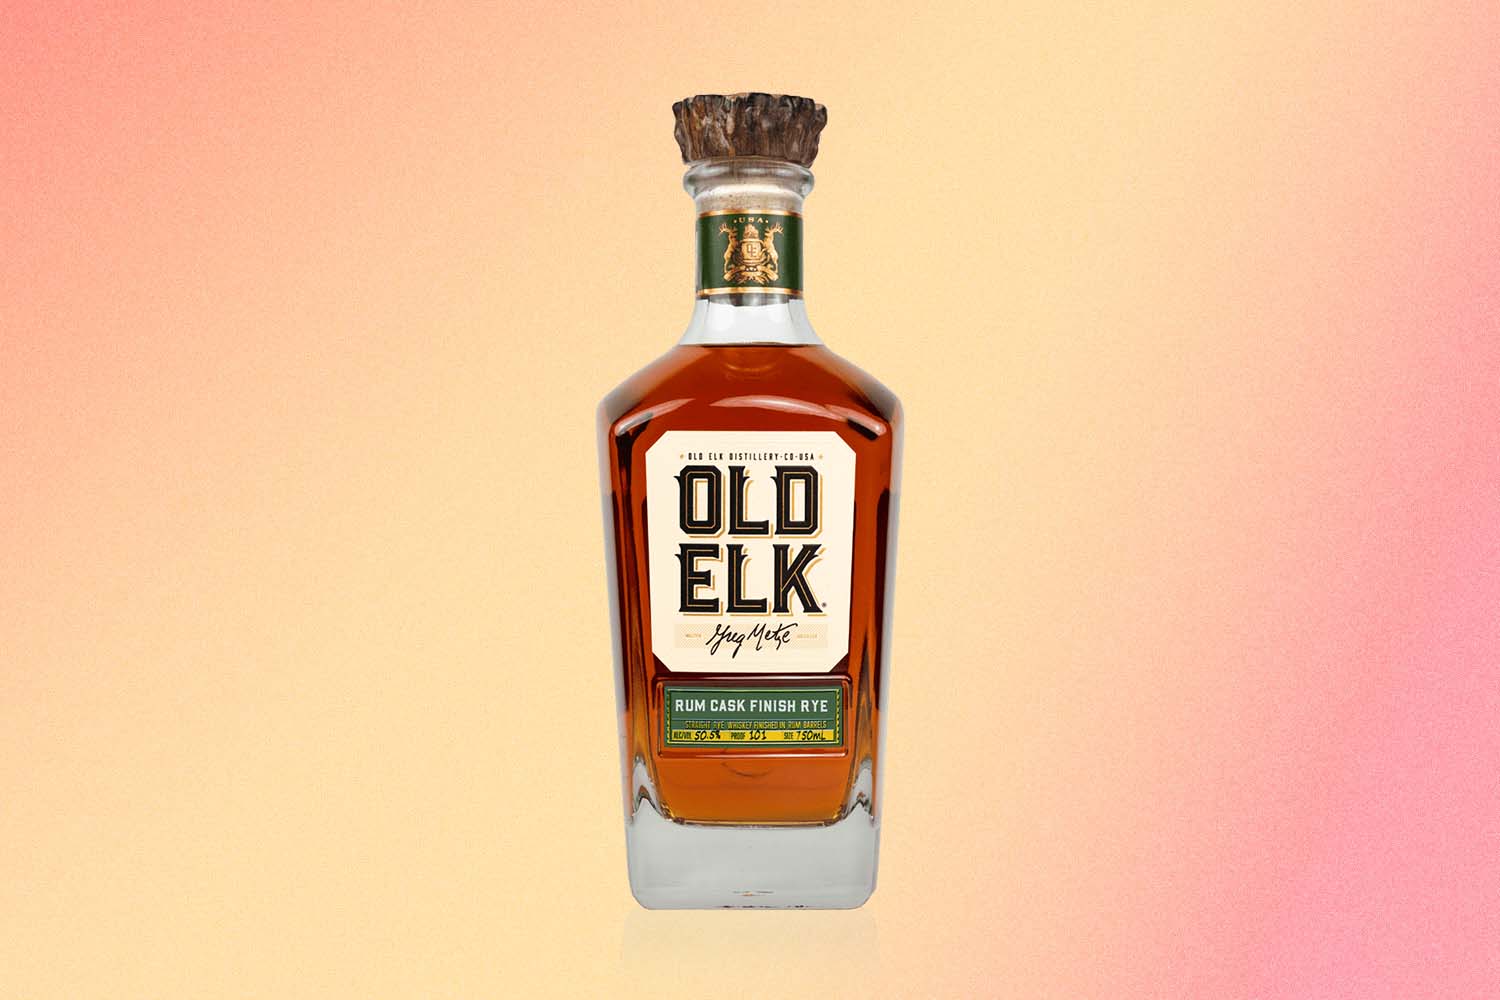 Old Elk Rum Cask Finish